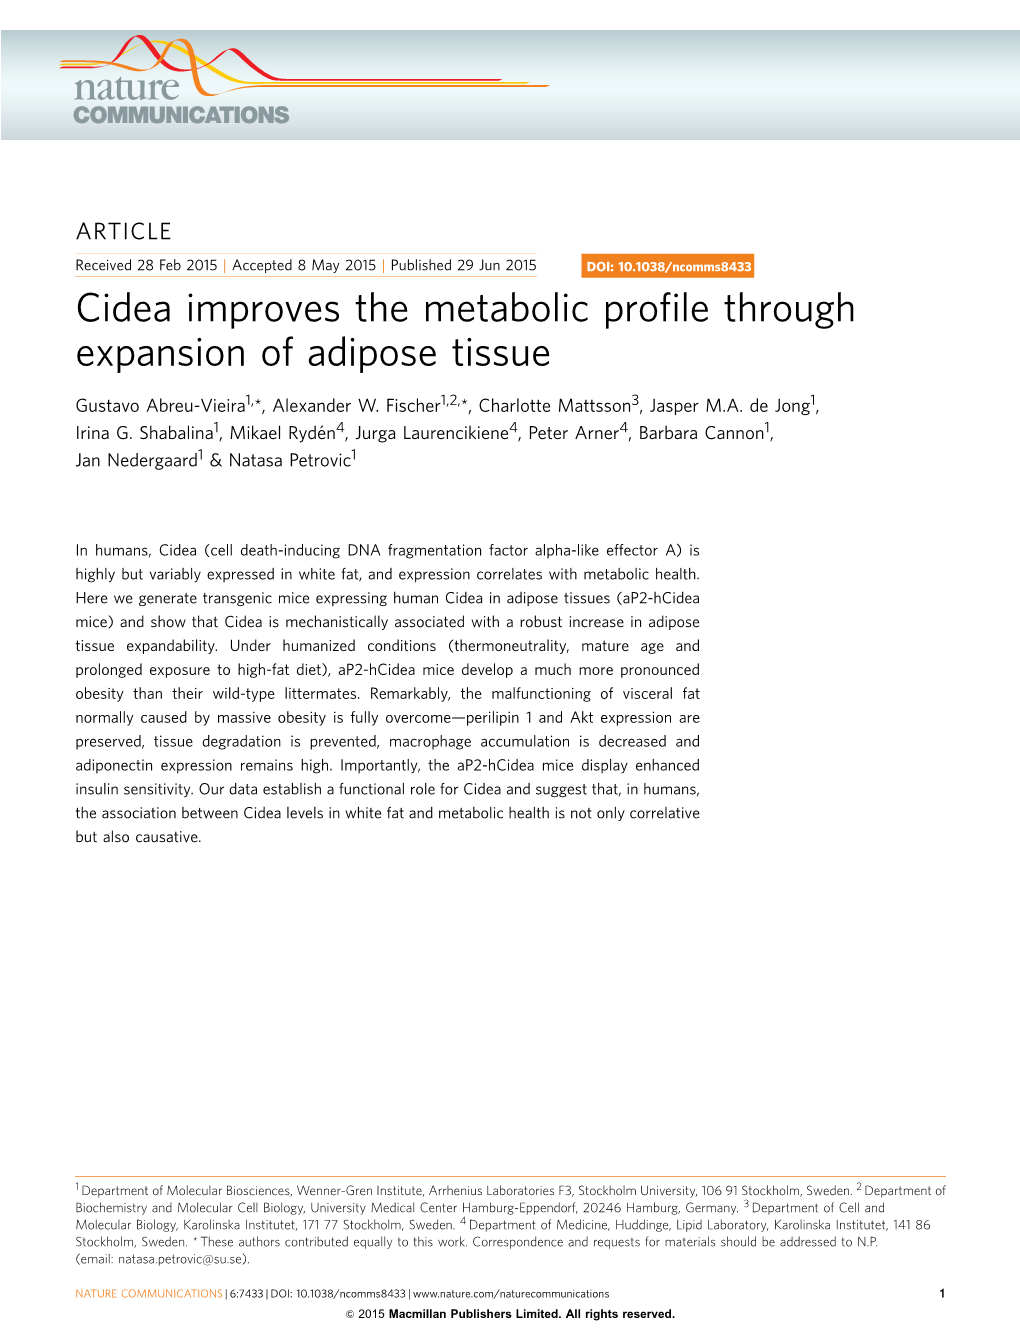 Cidea Improves the Metabolic Profile Through Expansion of Adipose Tissue